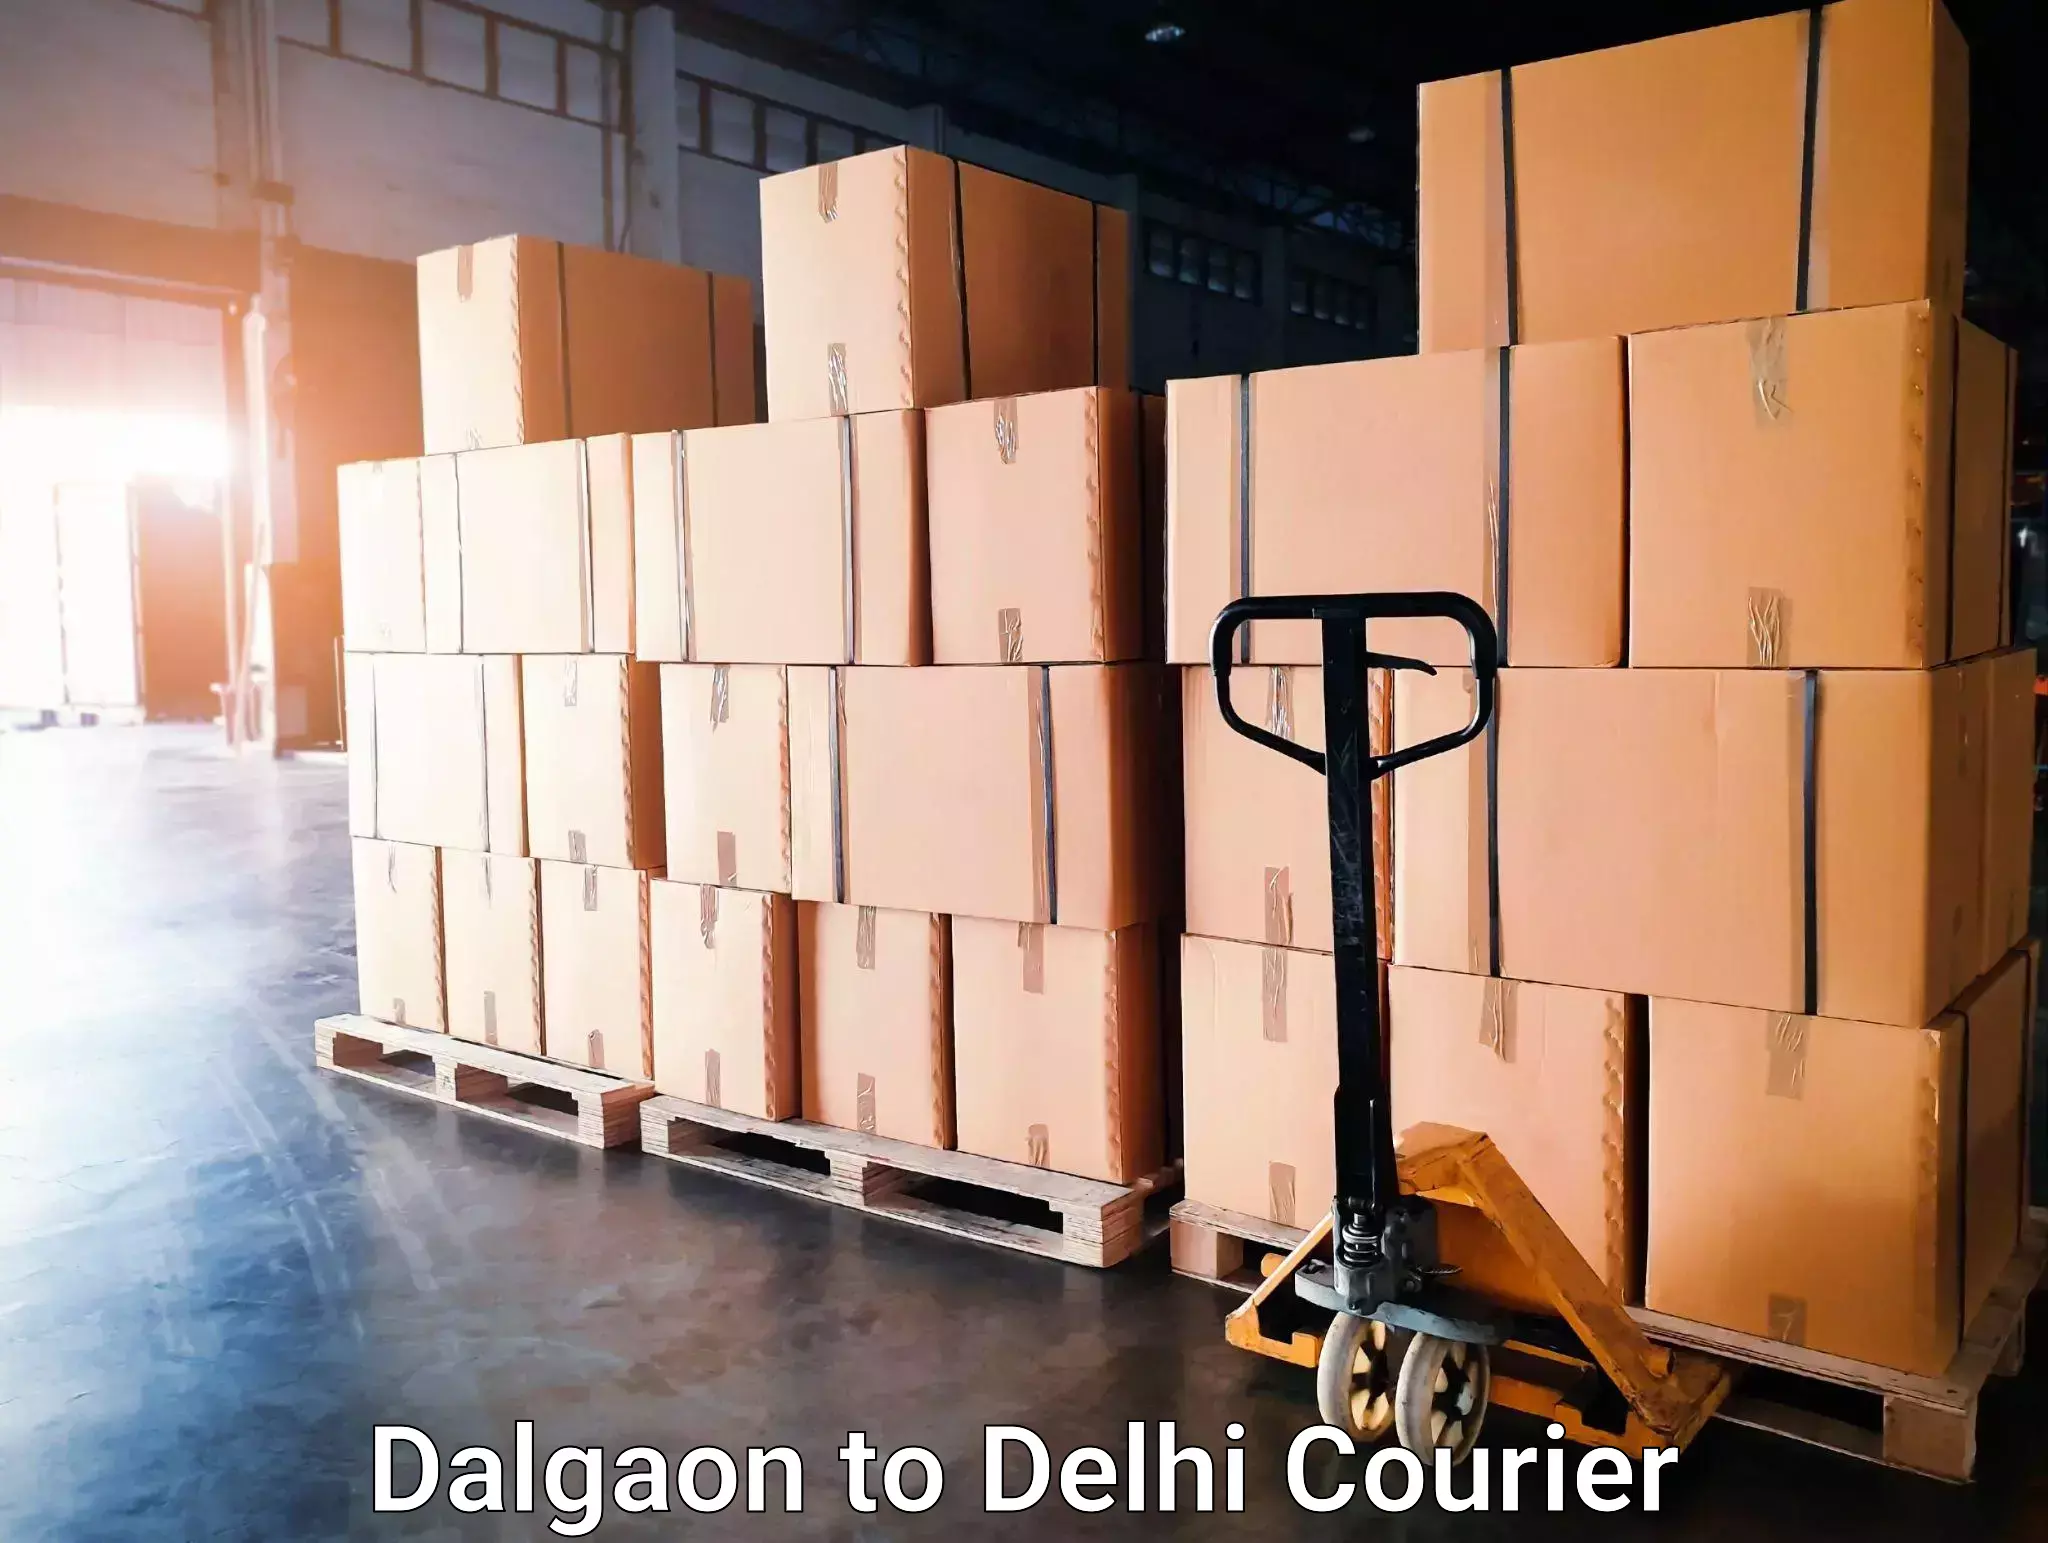 Doorstep parcel pickup Dalgaon to NCR